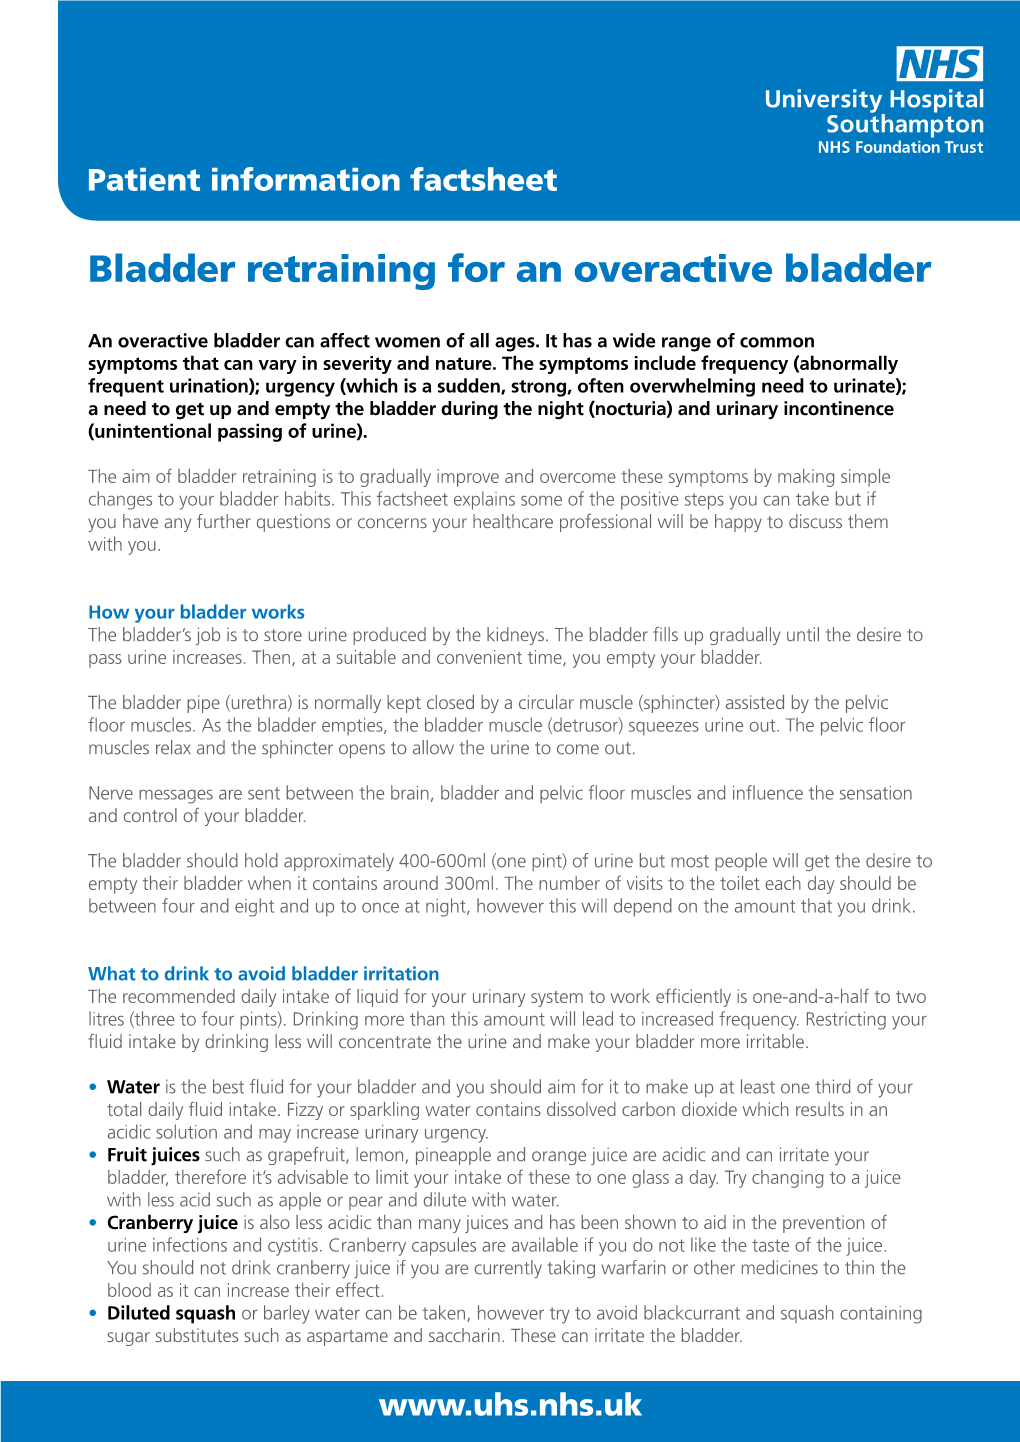 Bladder Retraining for an Overactive Bladder